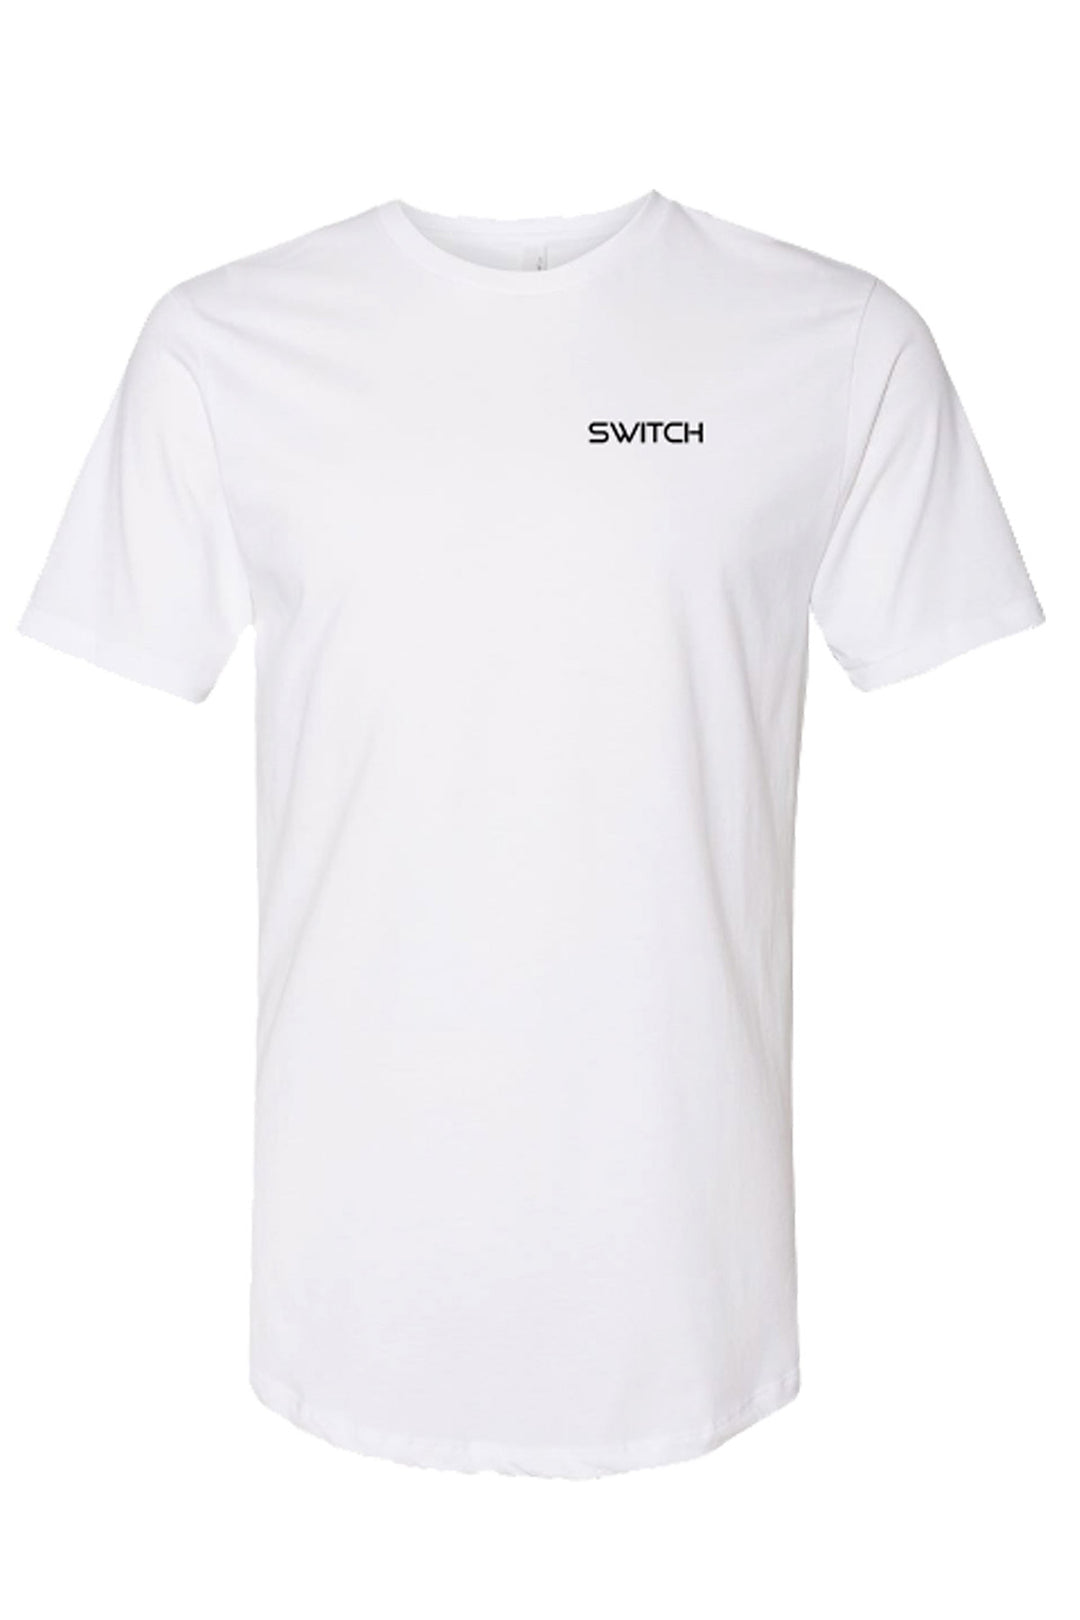 Unisex Cotton Long Body T-Shirt - Worldmark